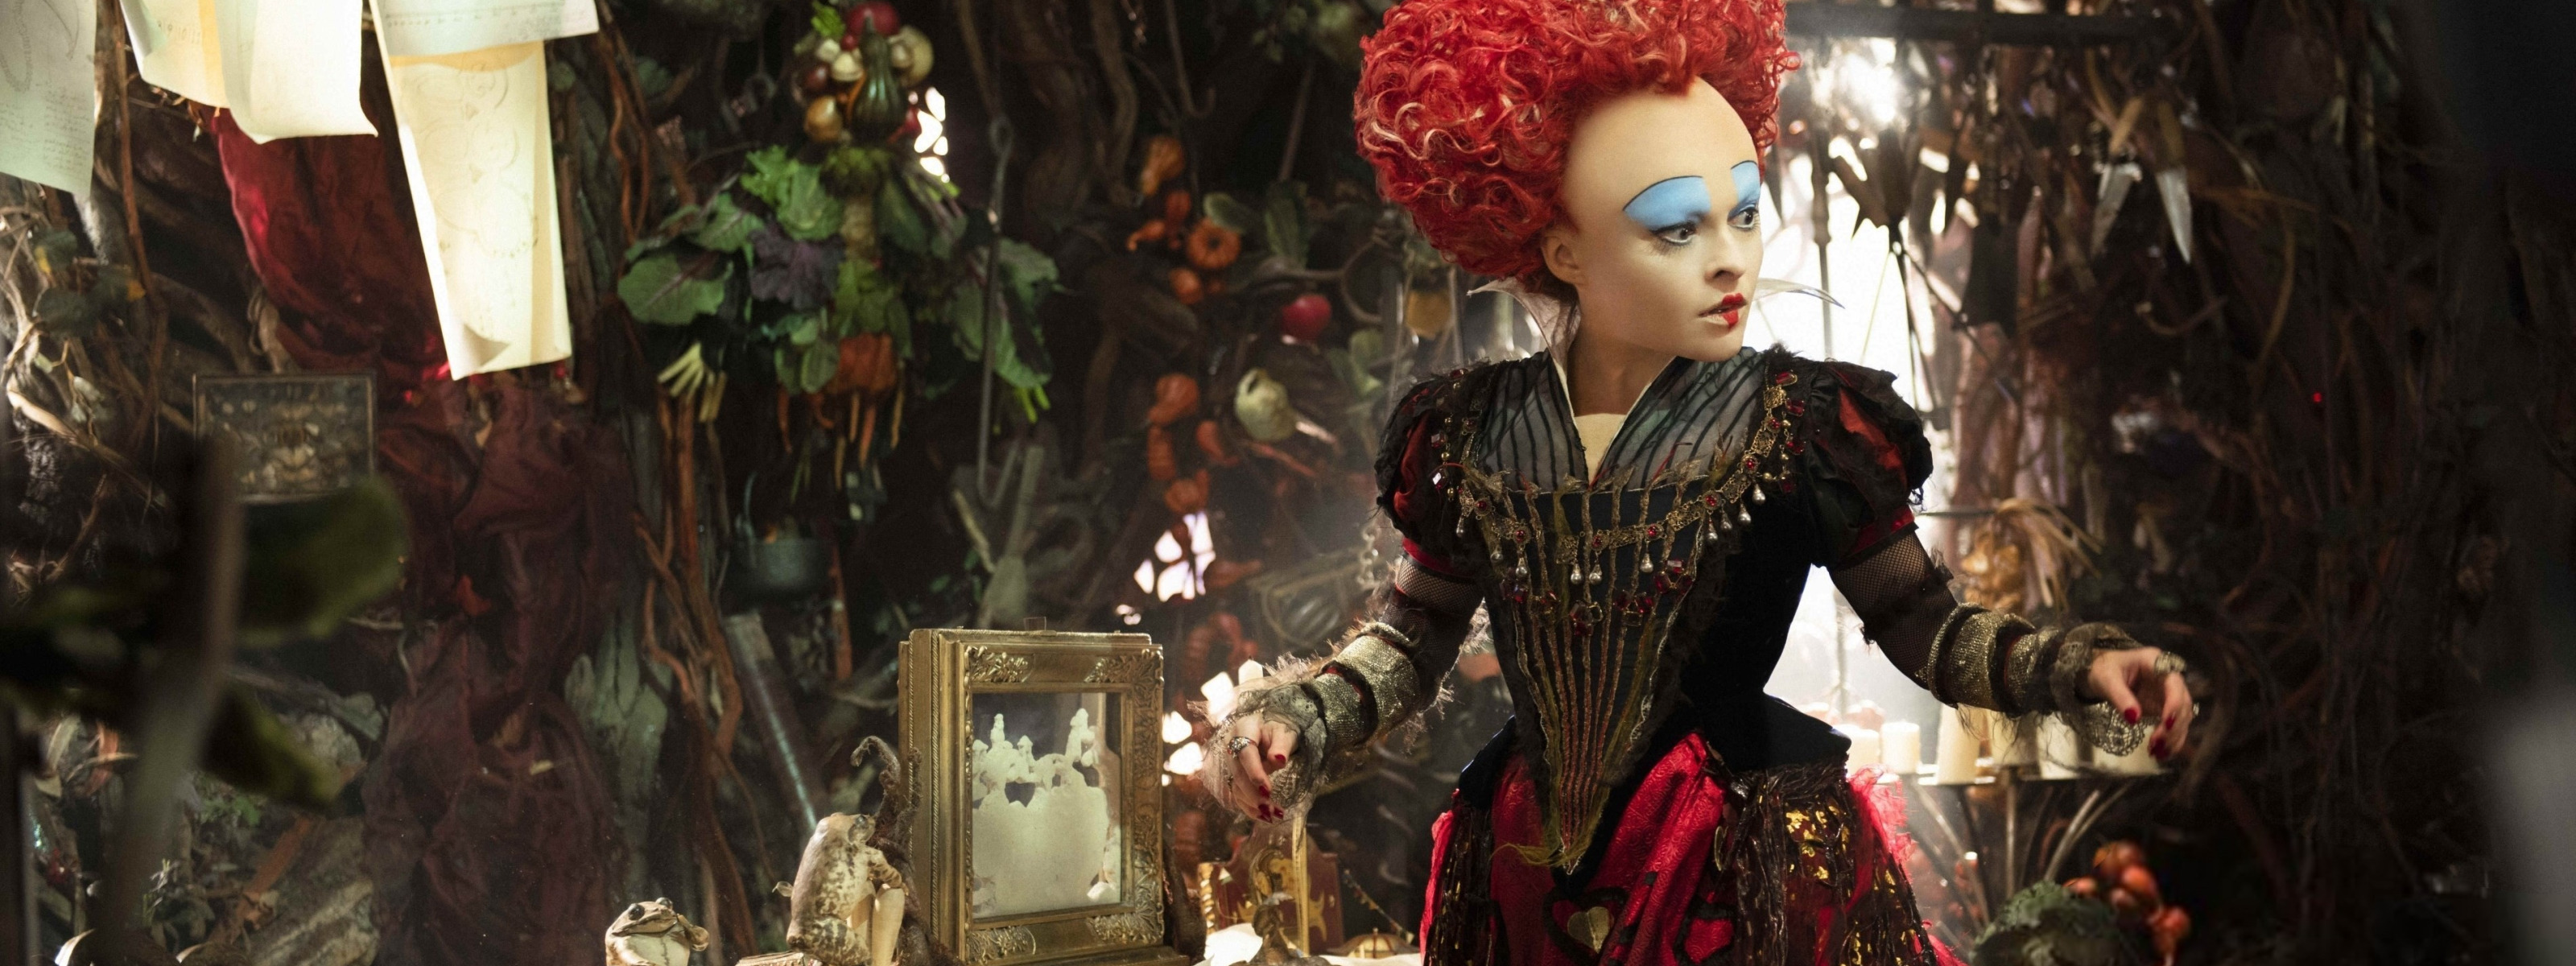 cinema, wallpaper, red, fantasy, Disney, Alice in Wonderland, red hair, dre...